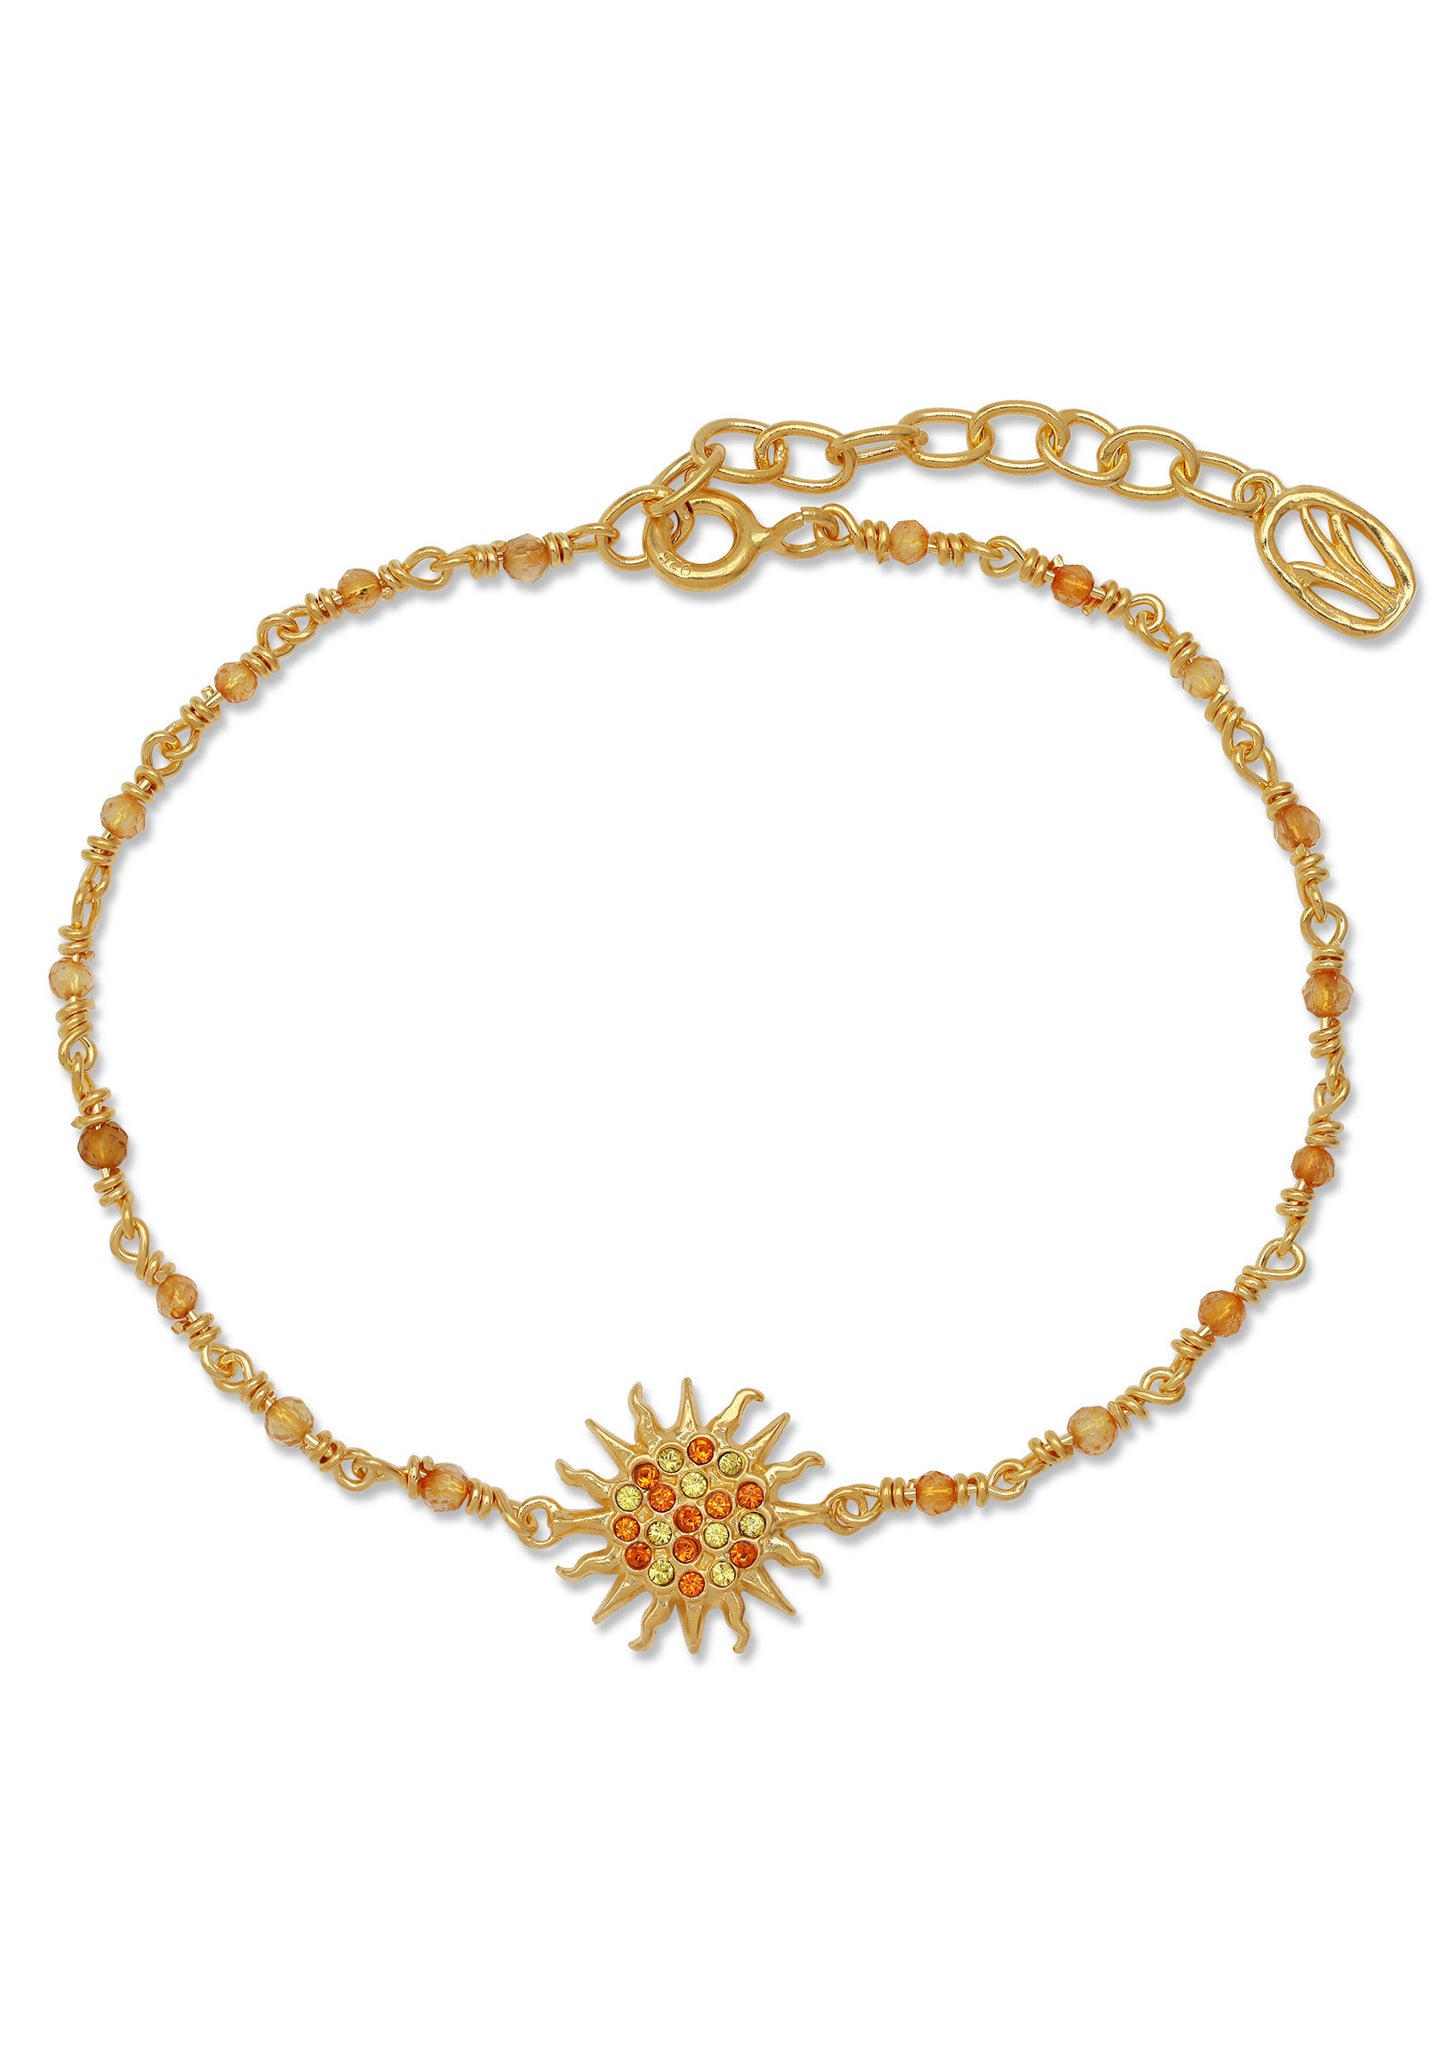 Sun Yellow Crystal and Bead Bracelet